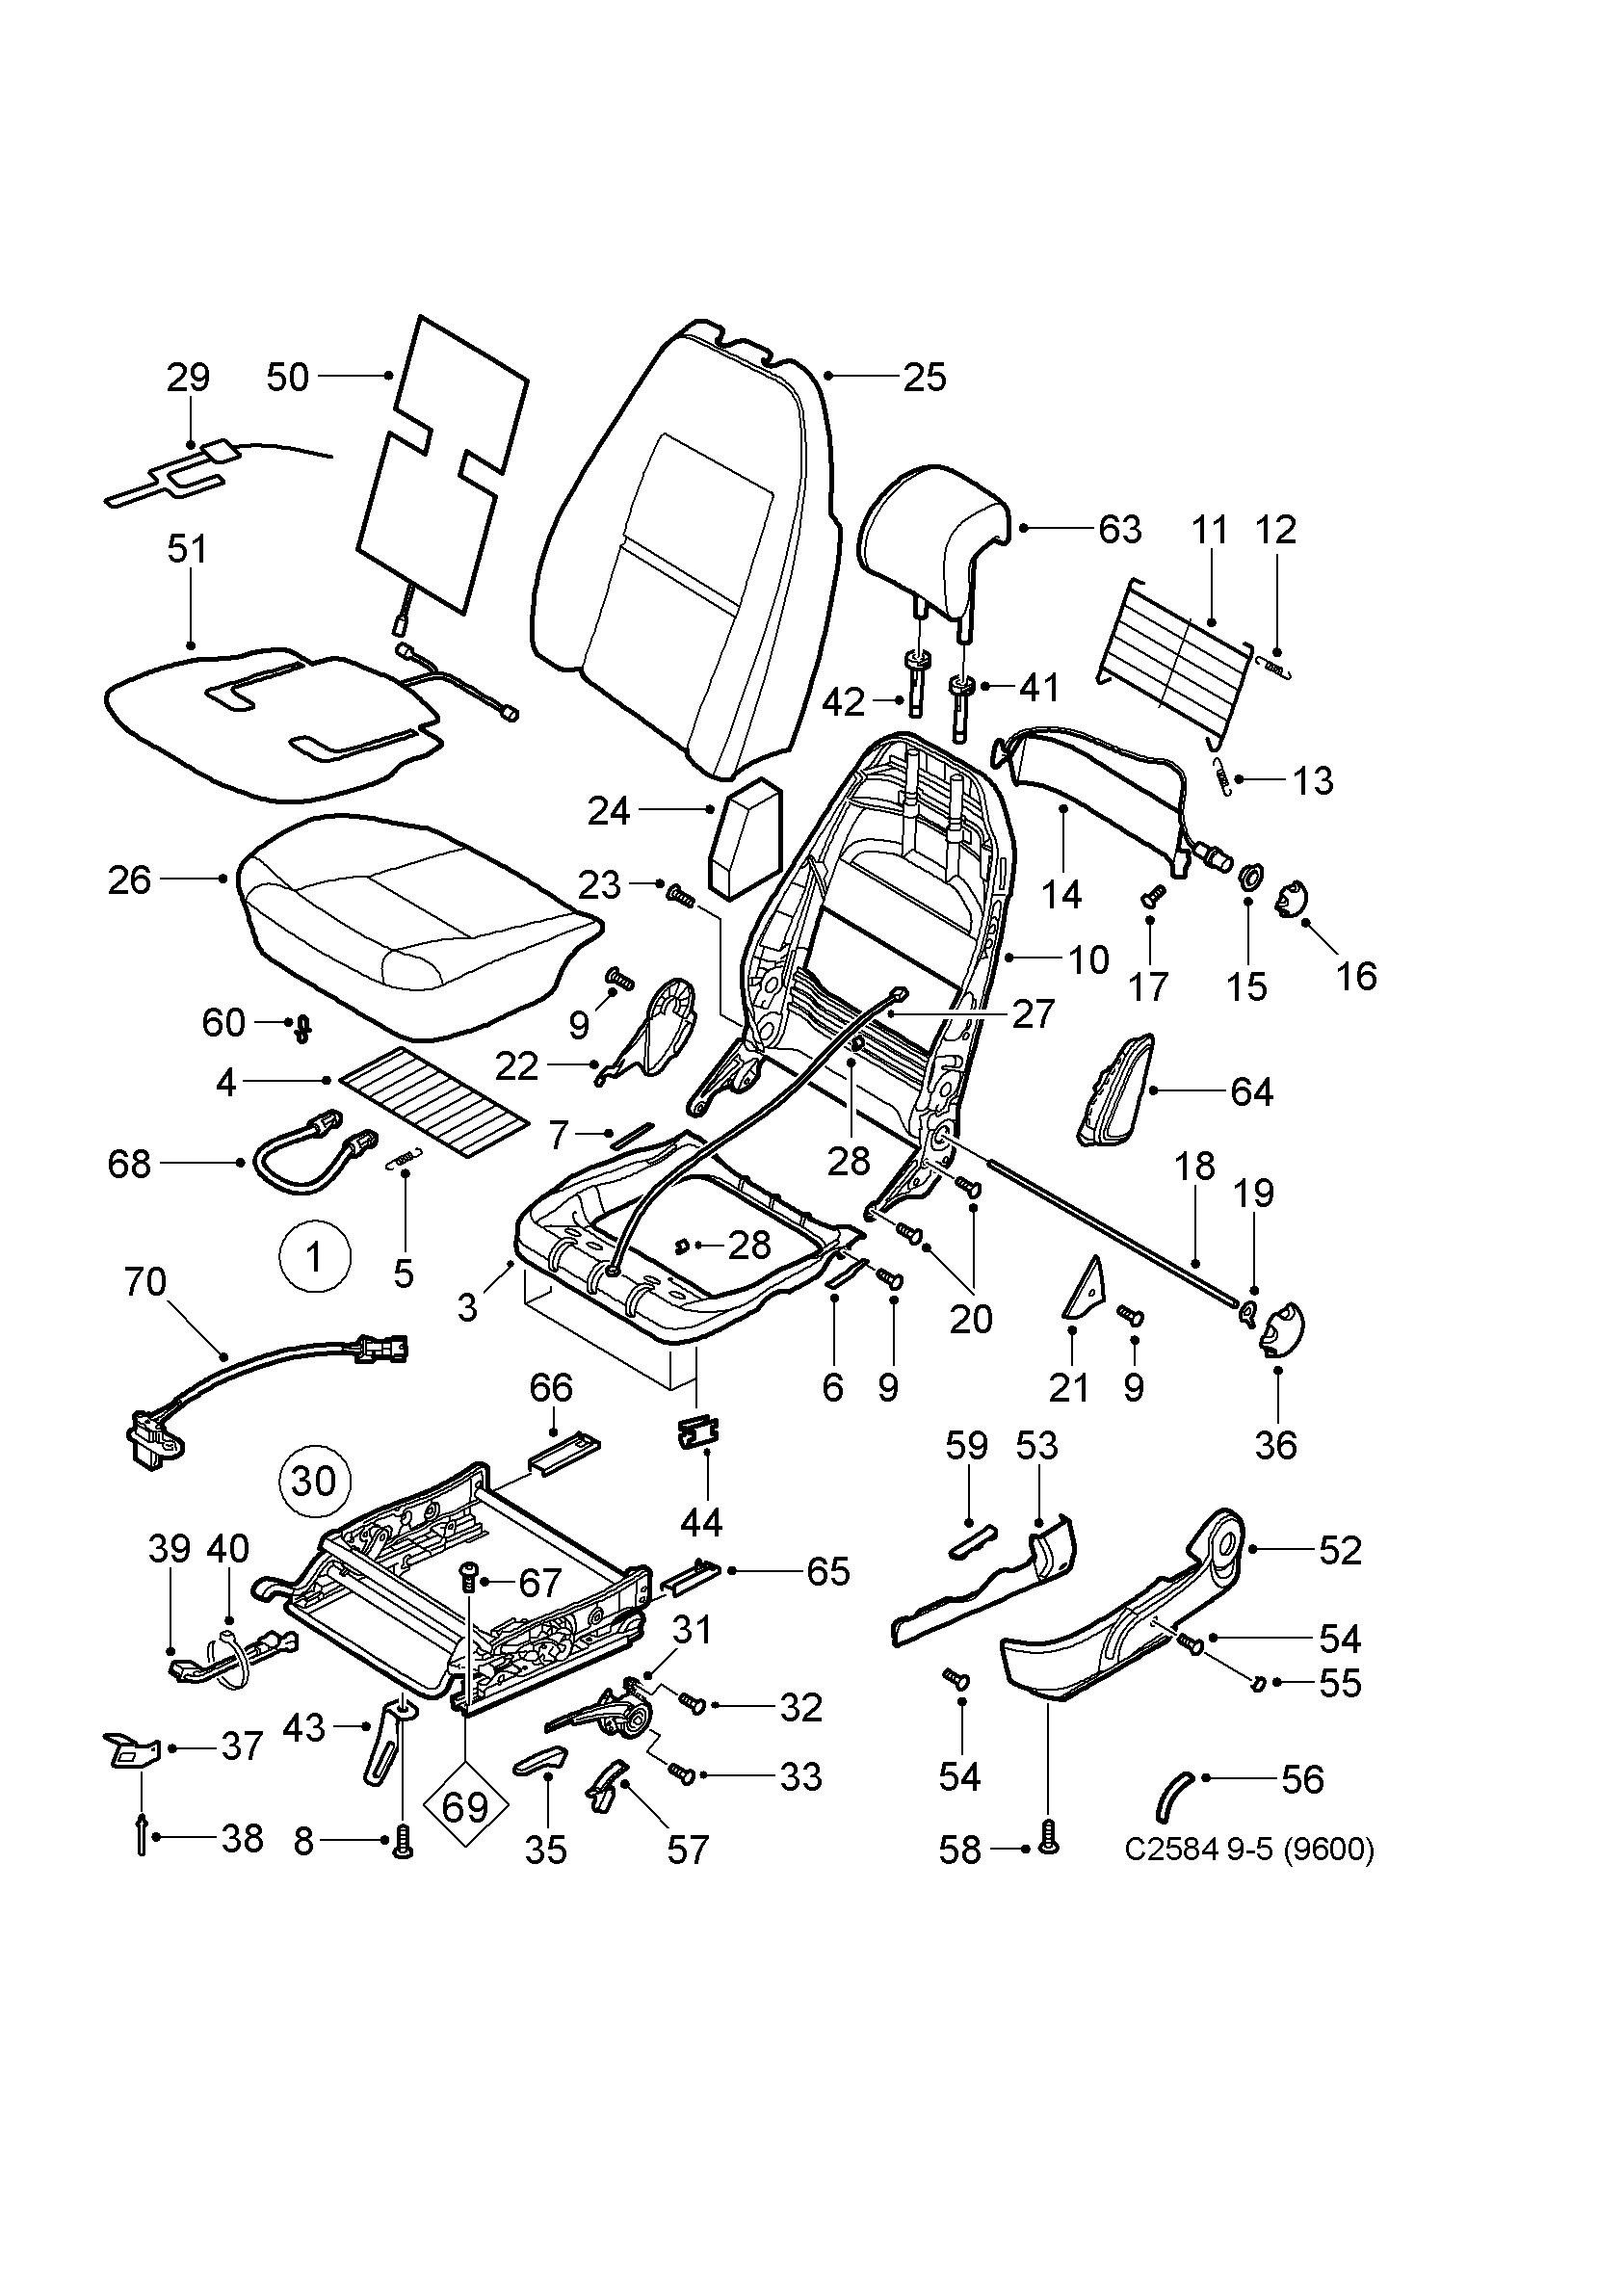 Seat - Manual, (1998-2010)